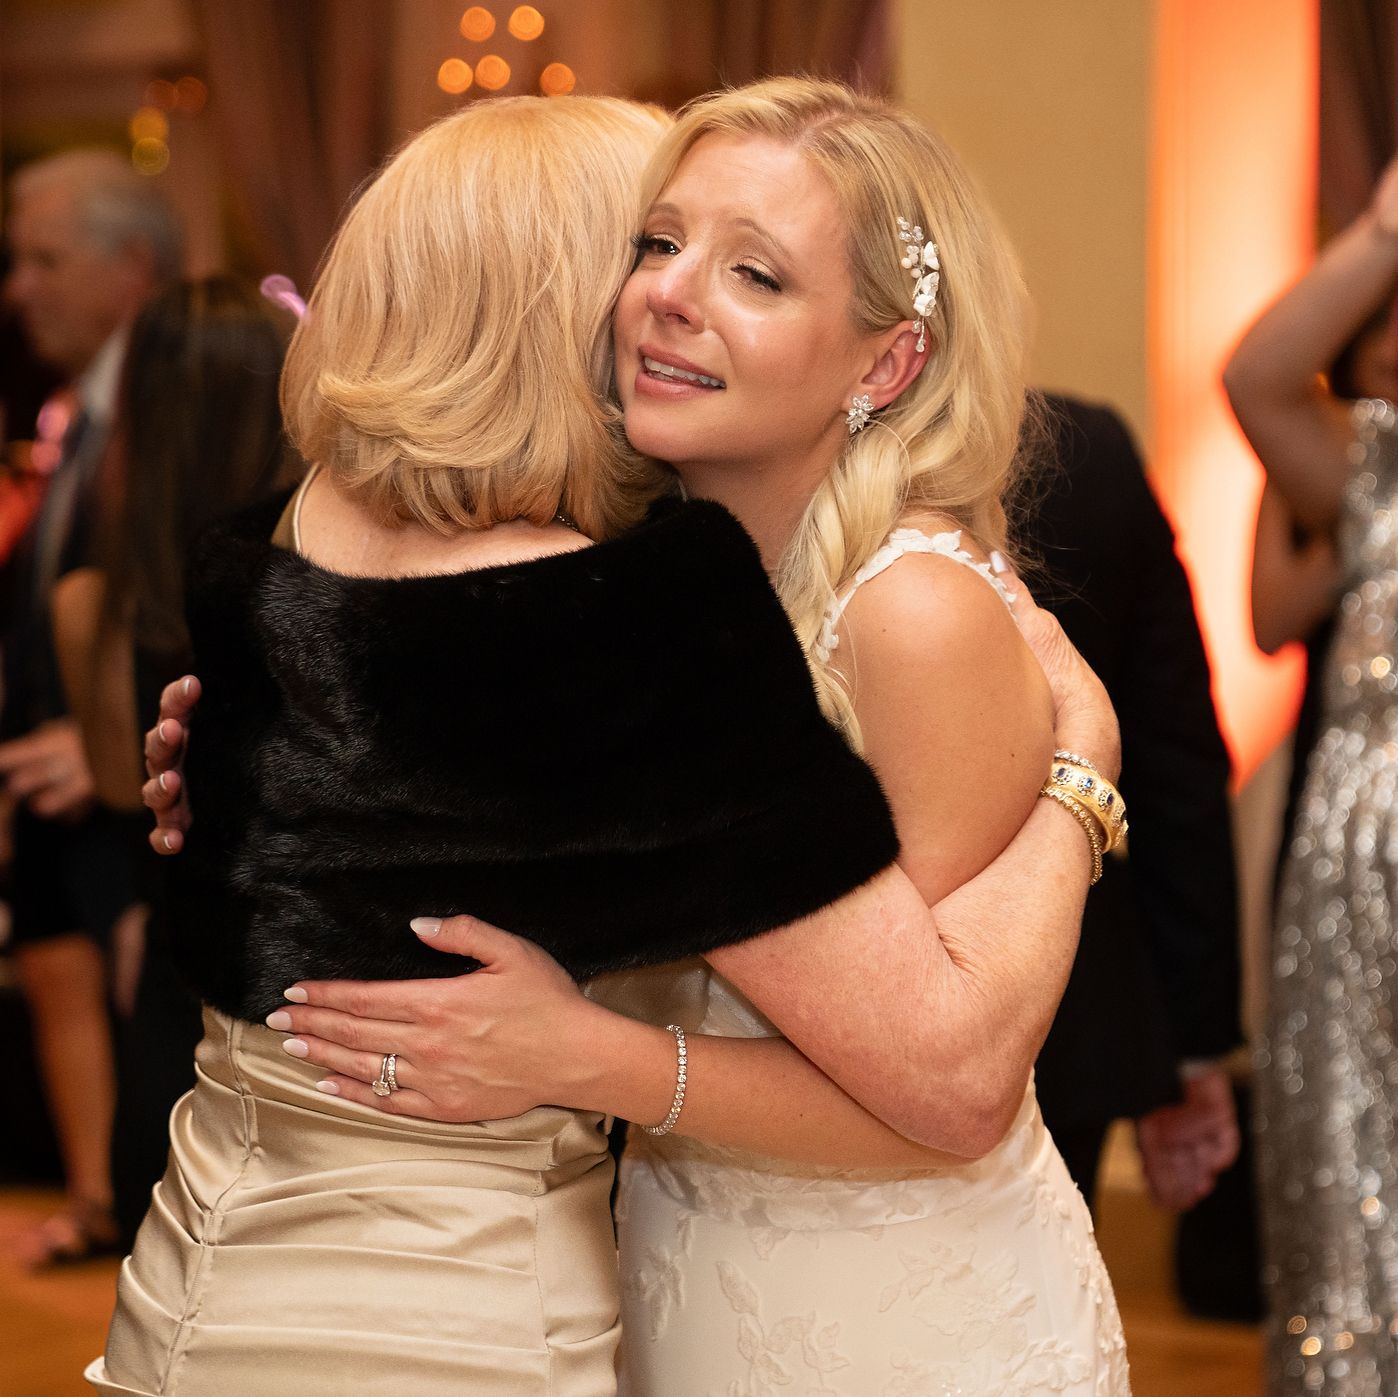 An Emotional Hug With Mom 